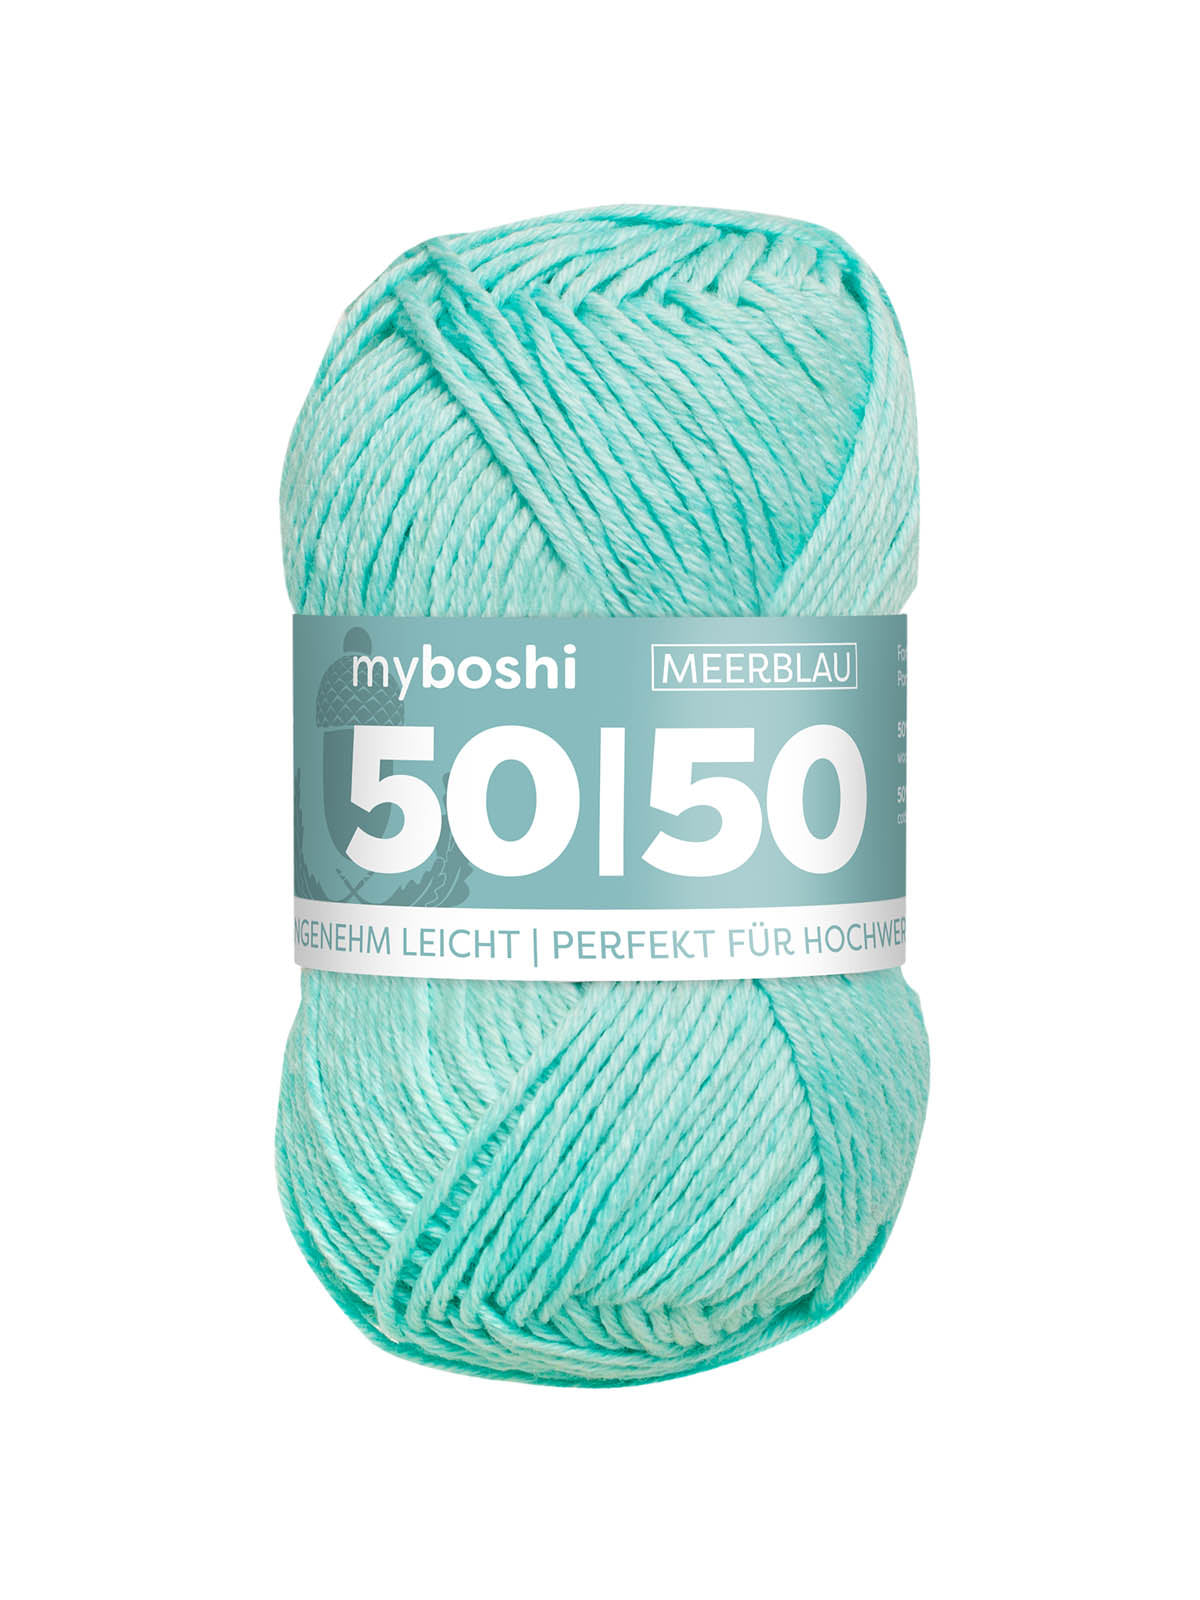 50/50 myboshi, color sea blue 958